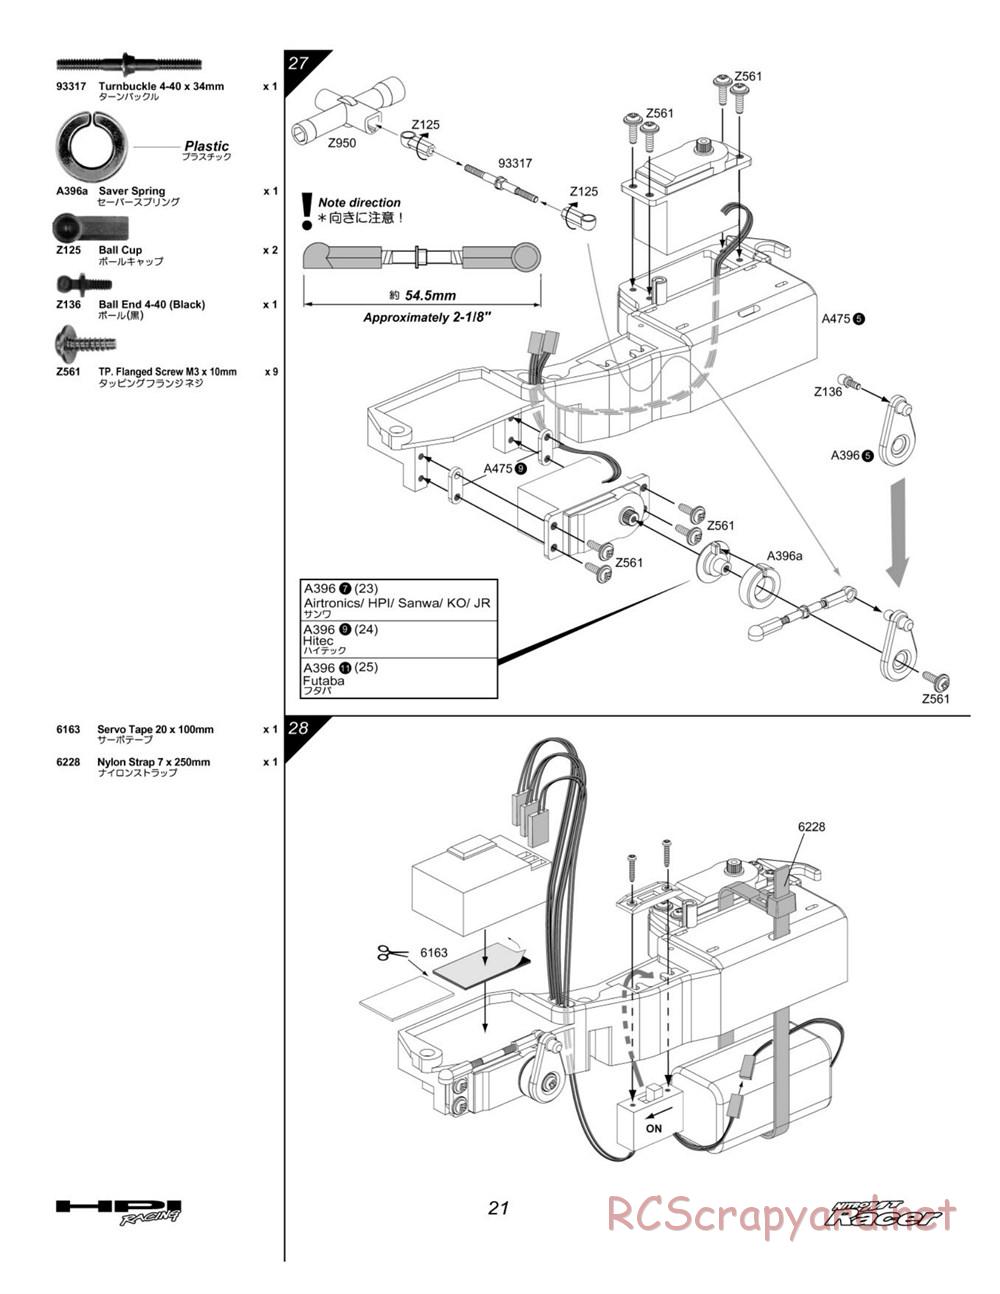 HPI - Nitro MT Racer - Manual - Page 21